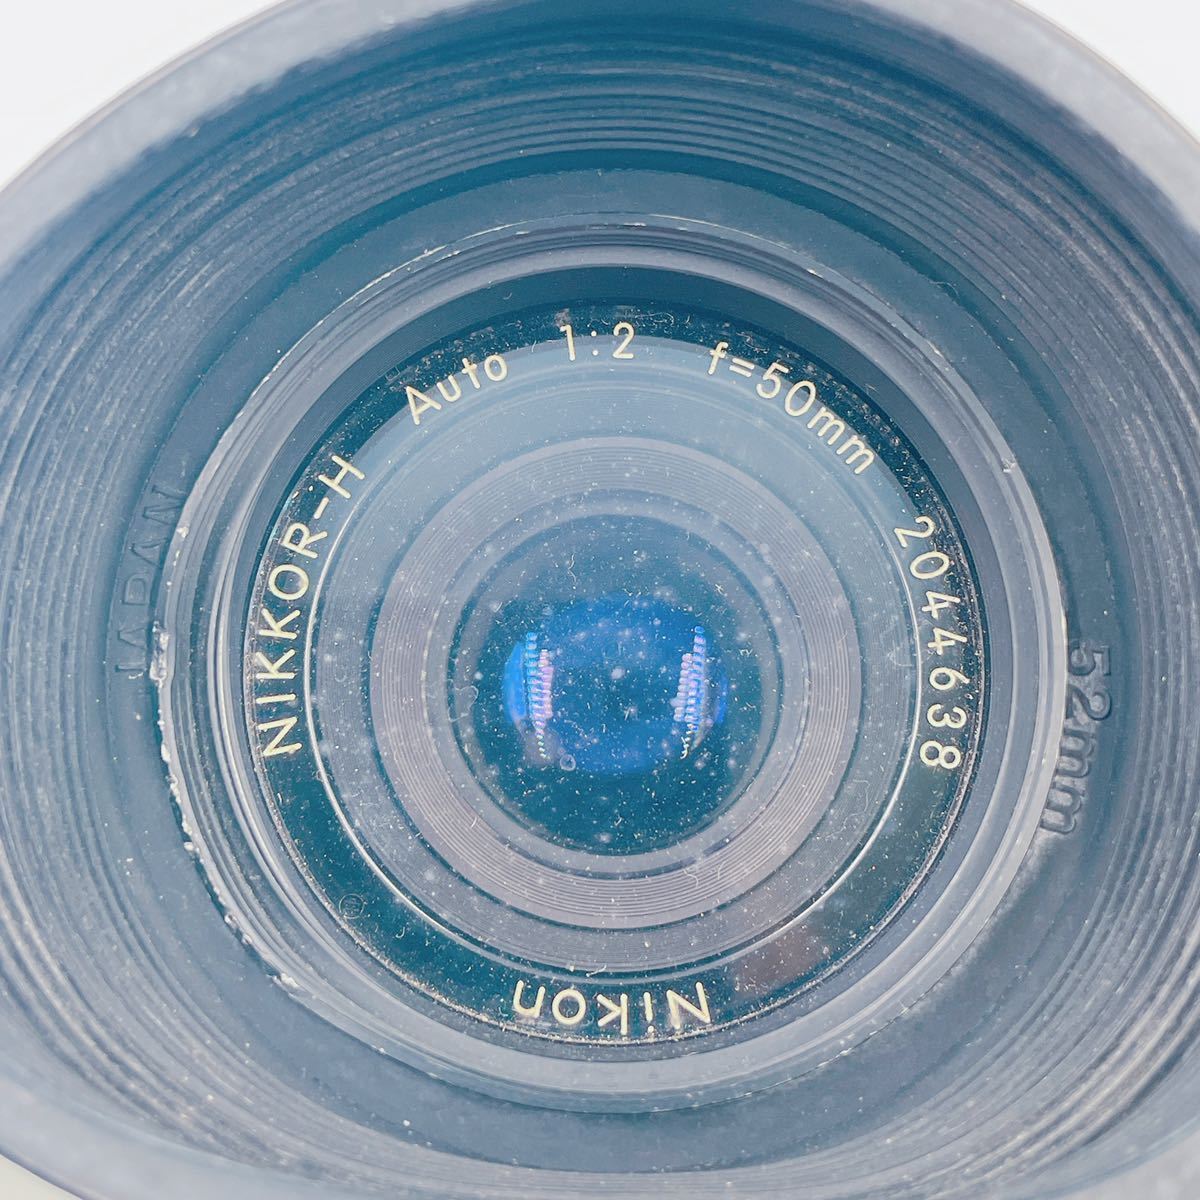 11A94 Nikon ニコン nikomat EL カメラ フィルムカメラ 肩紐付 52mm SL-1A ズームレンズ _画像6